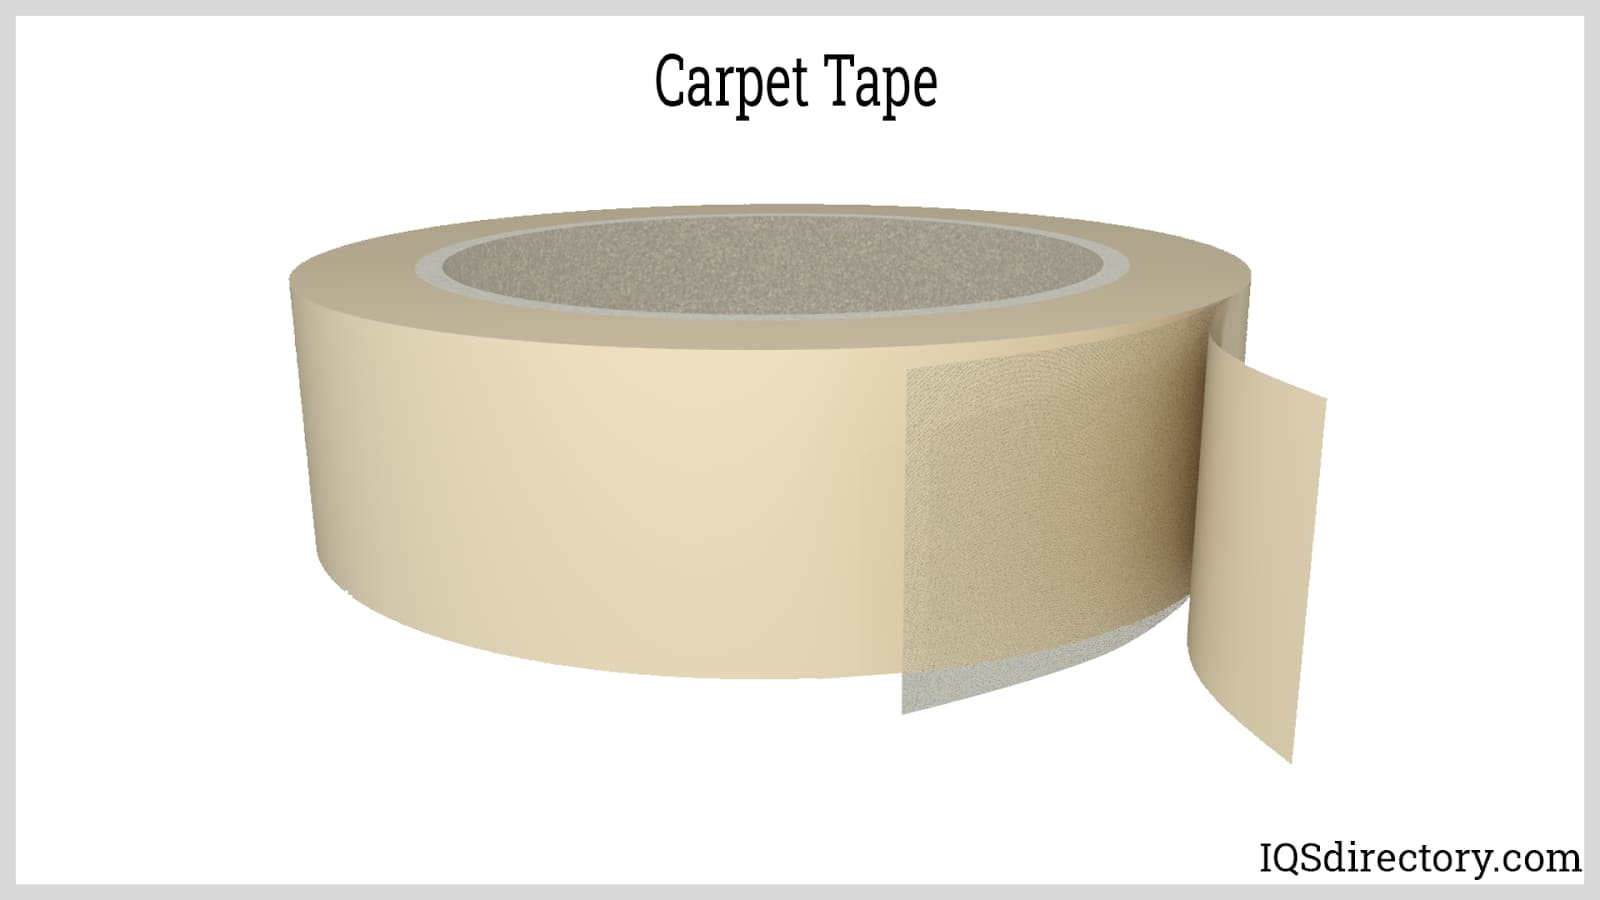 https://www.iqsdirectory.com/articles/tape-suppliers/carpet-tape/carpet-tape.jpg